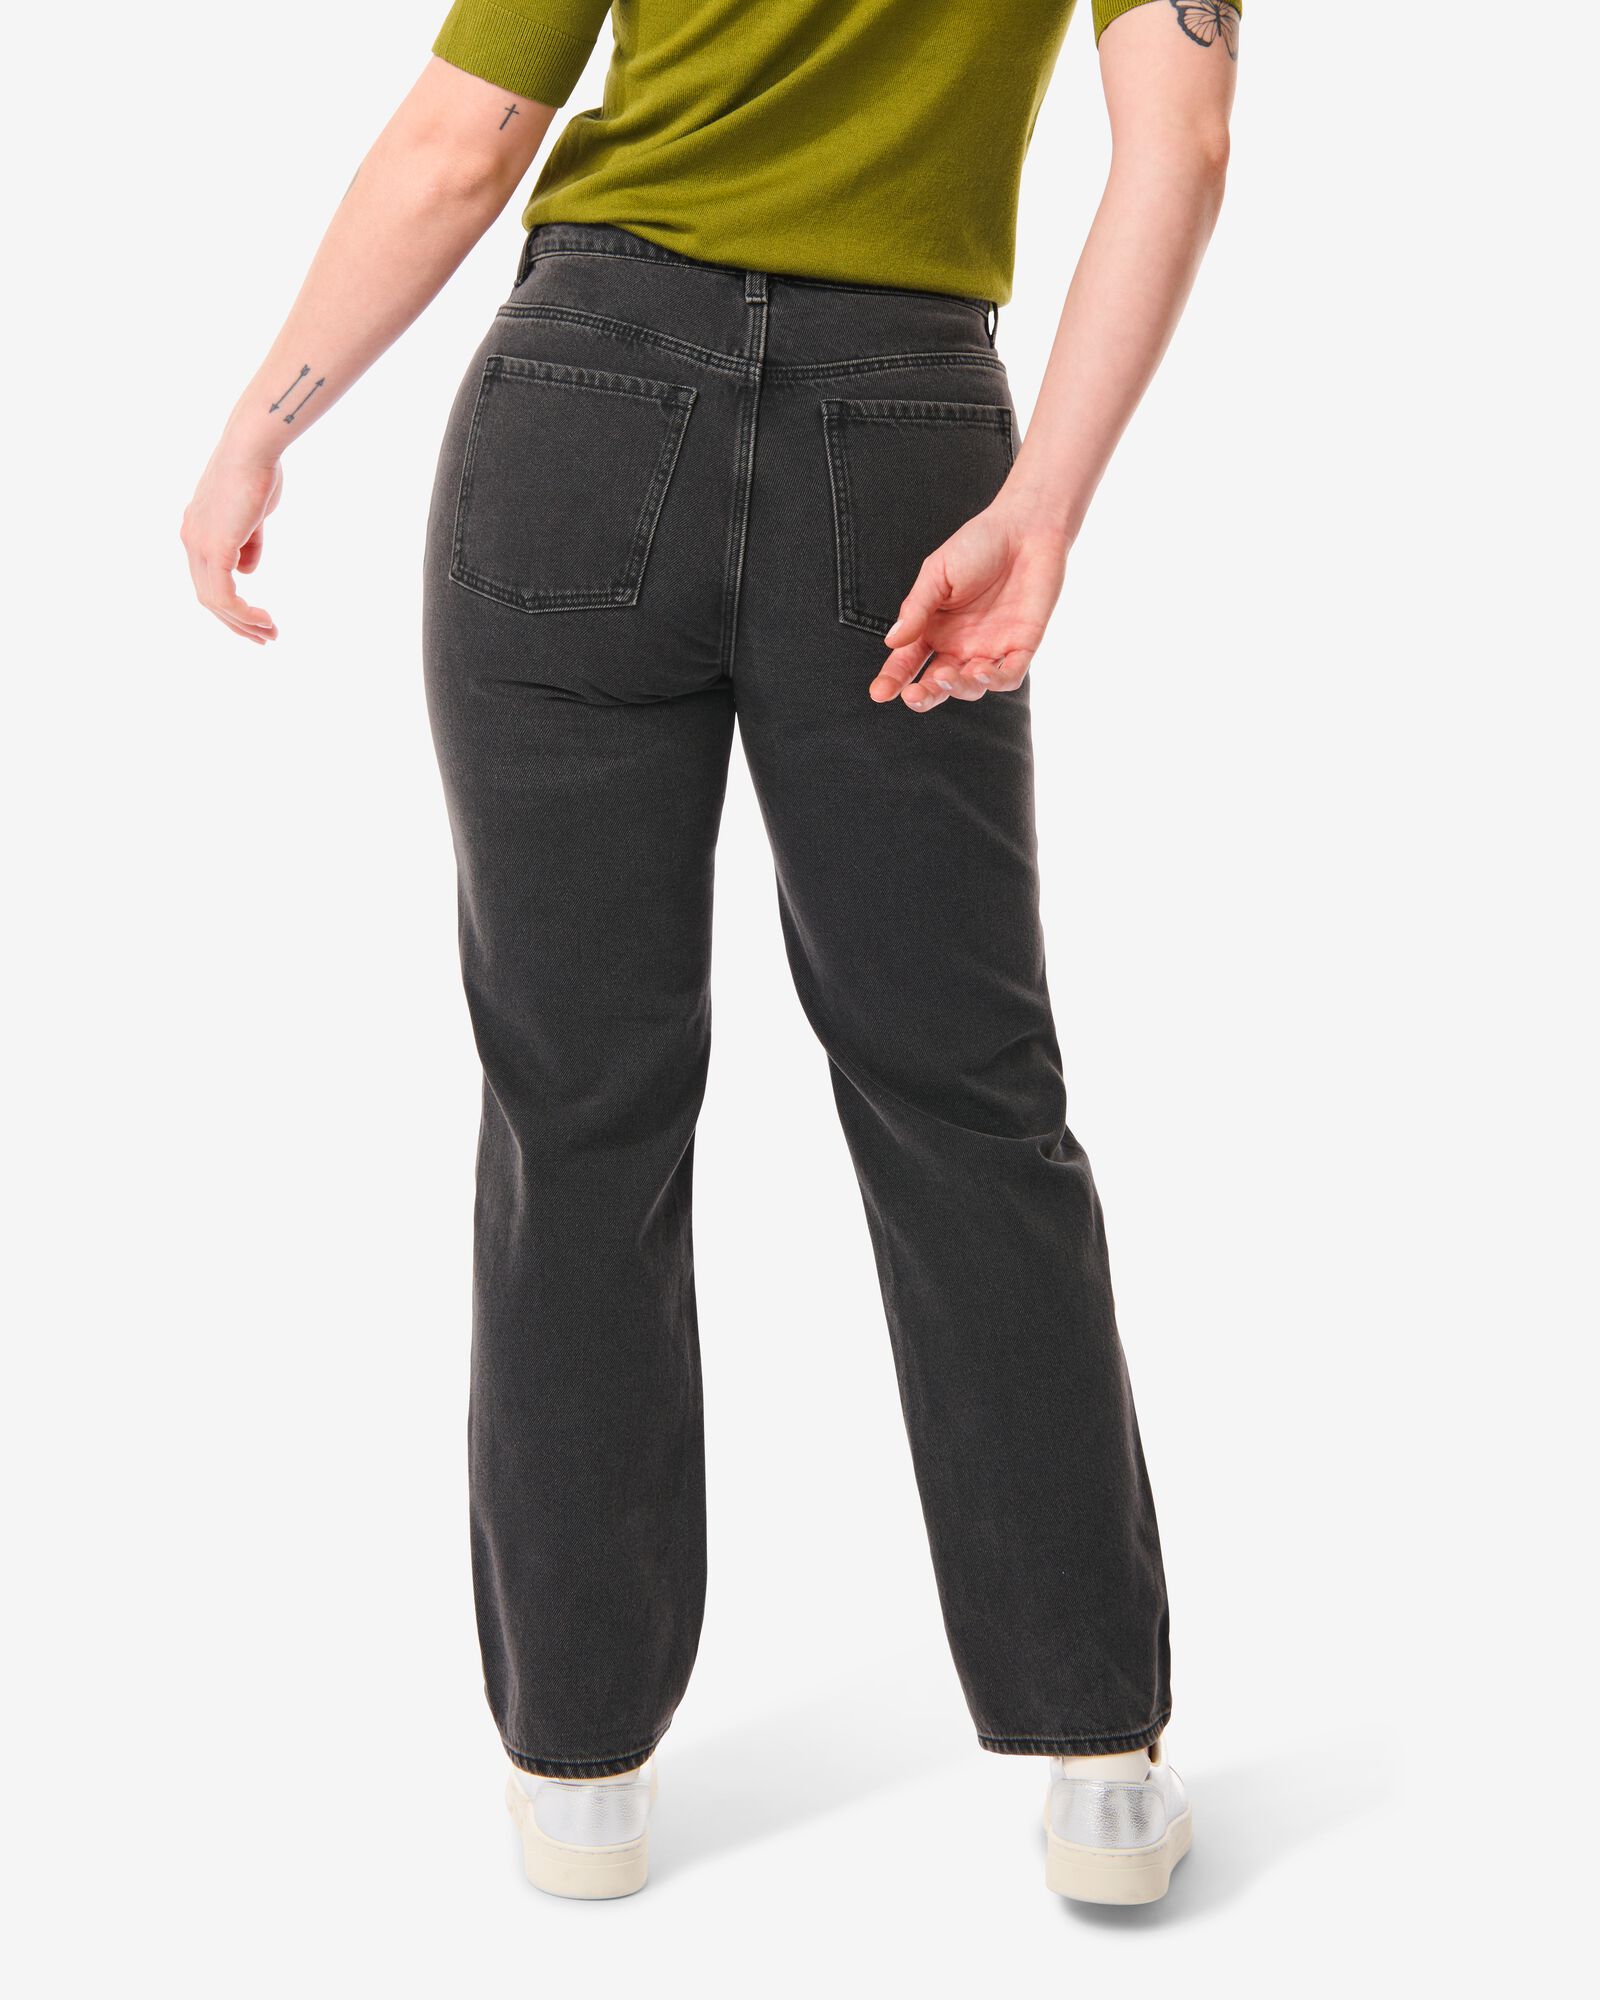 Damen-Jeans, Straight Fit dunkelgrau 40 - 36319983 - HEMA